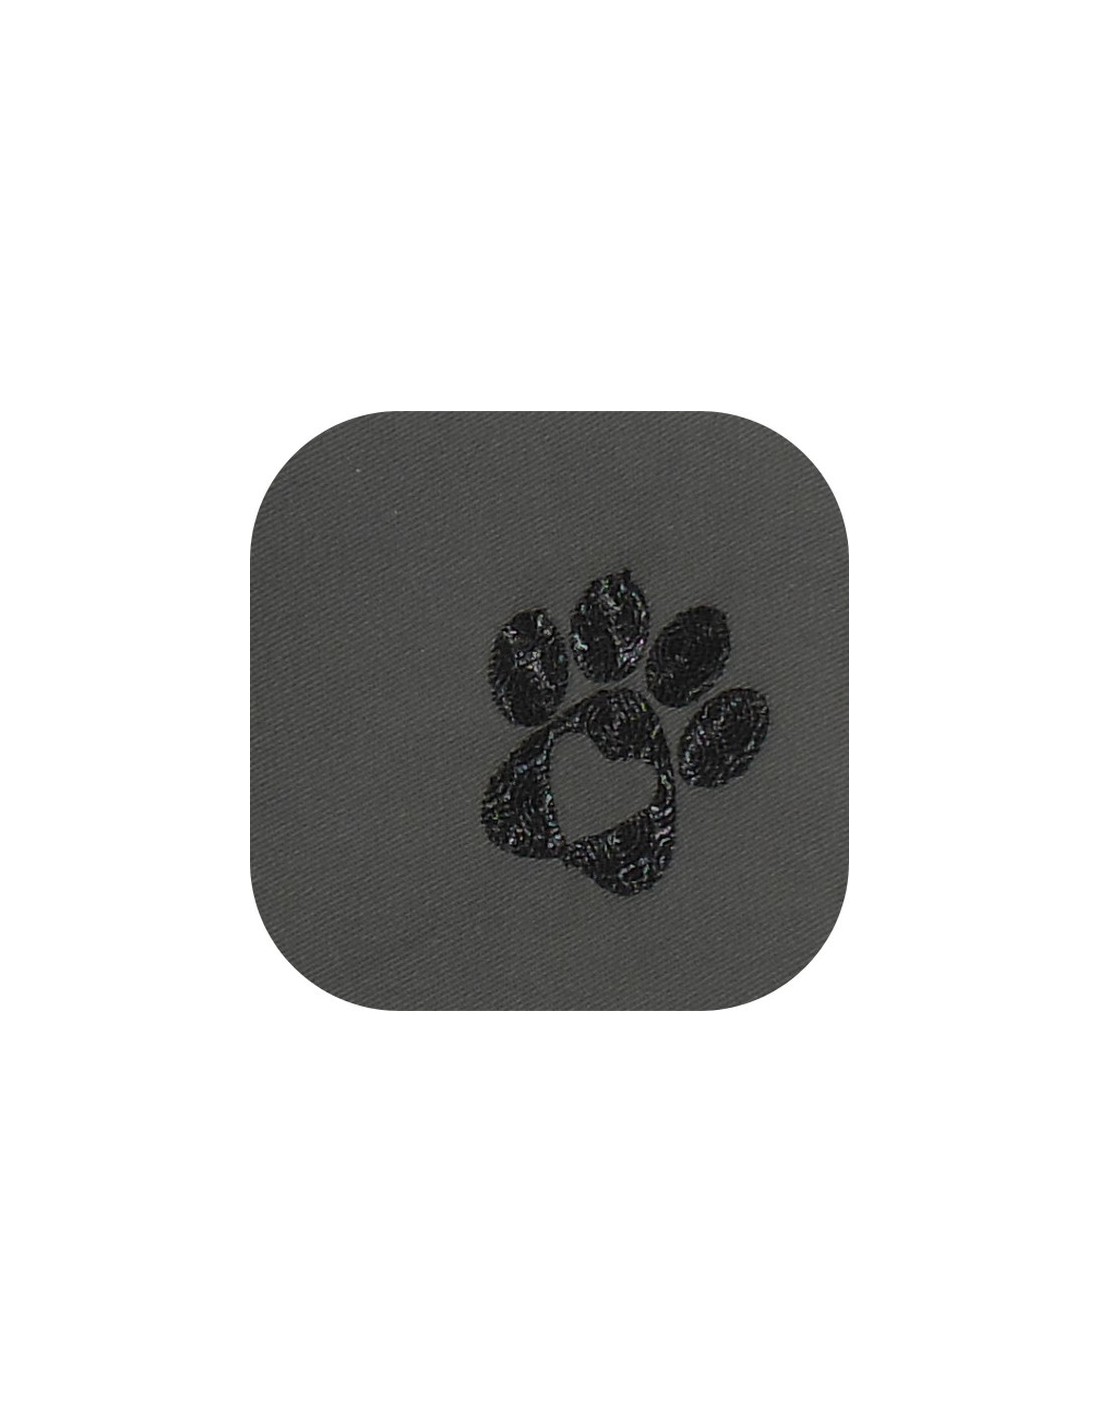 Dog Pillow Cushion Machine Embroidery Design Download 4x4 5x7 8x8